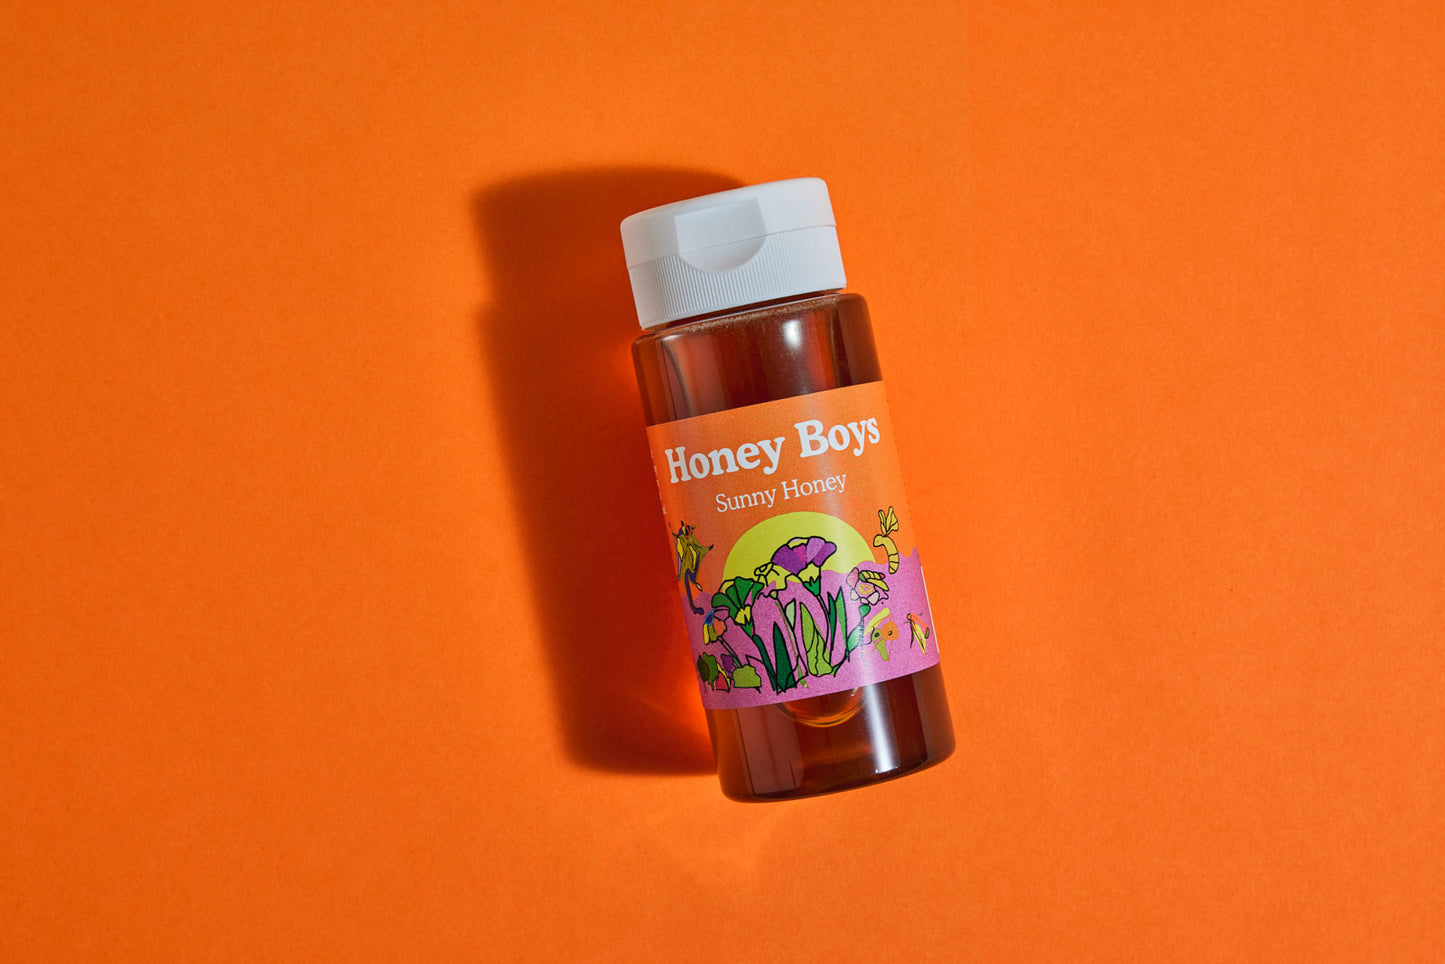 Honey Boys Sunny Honey Squeeze (330g)